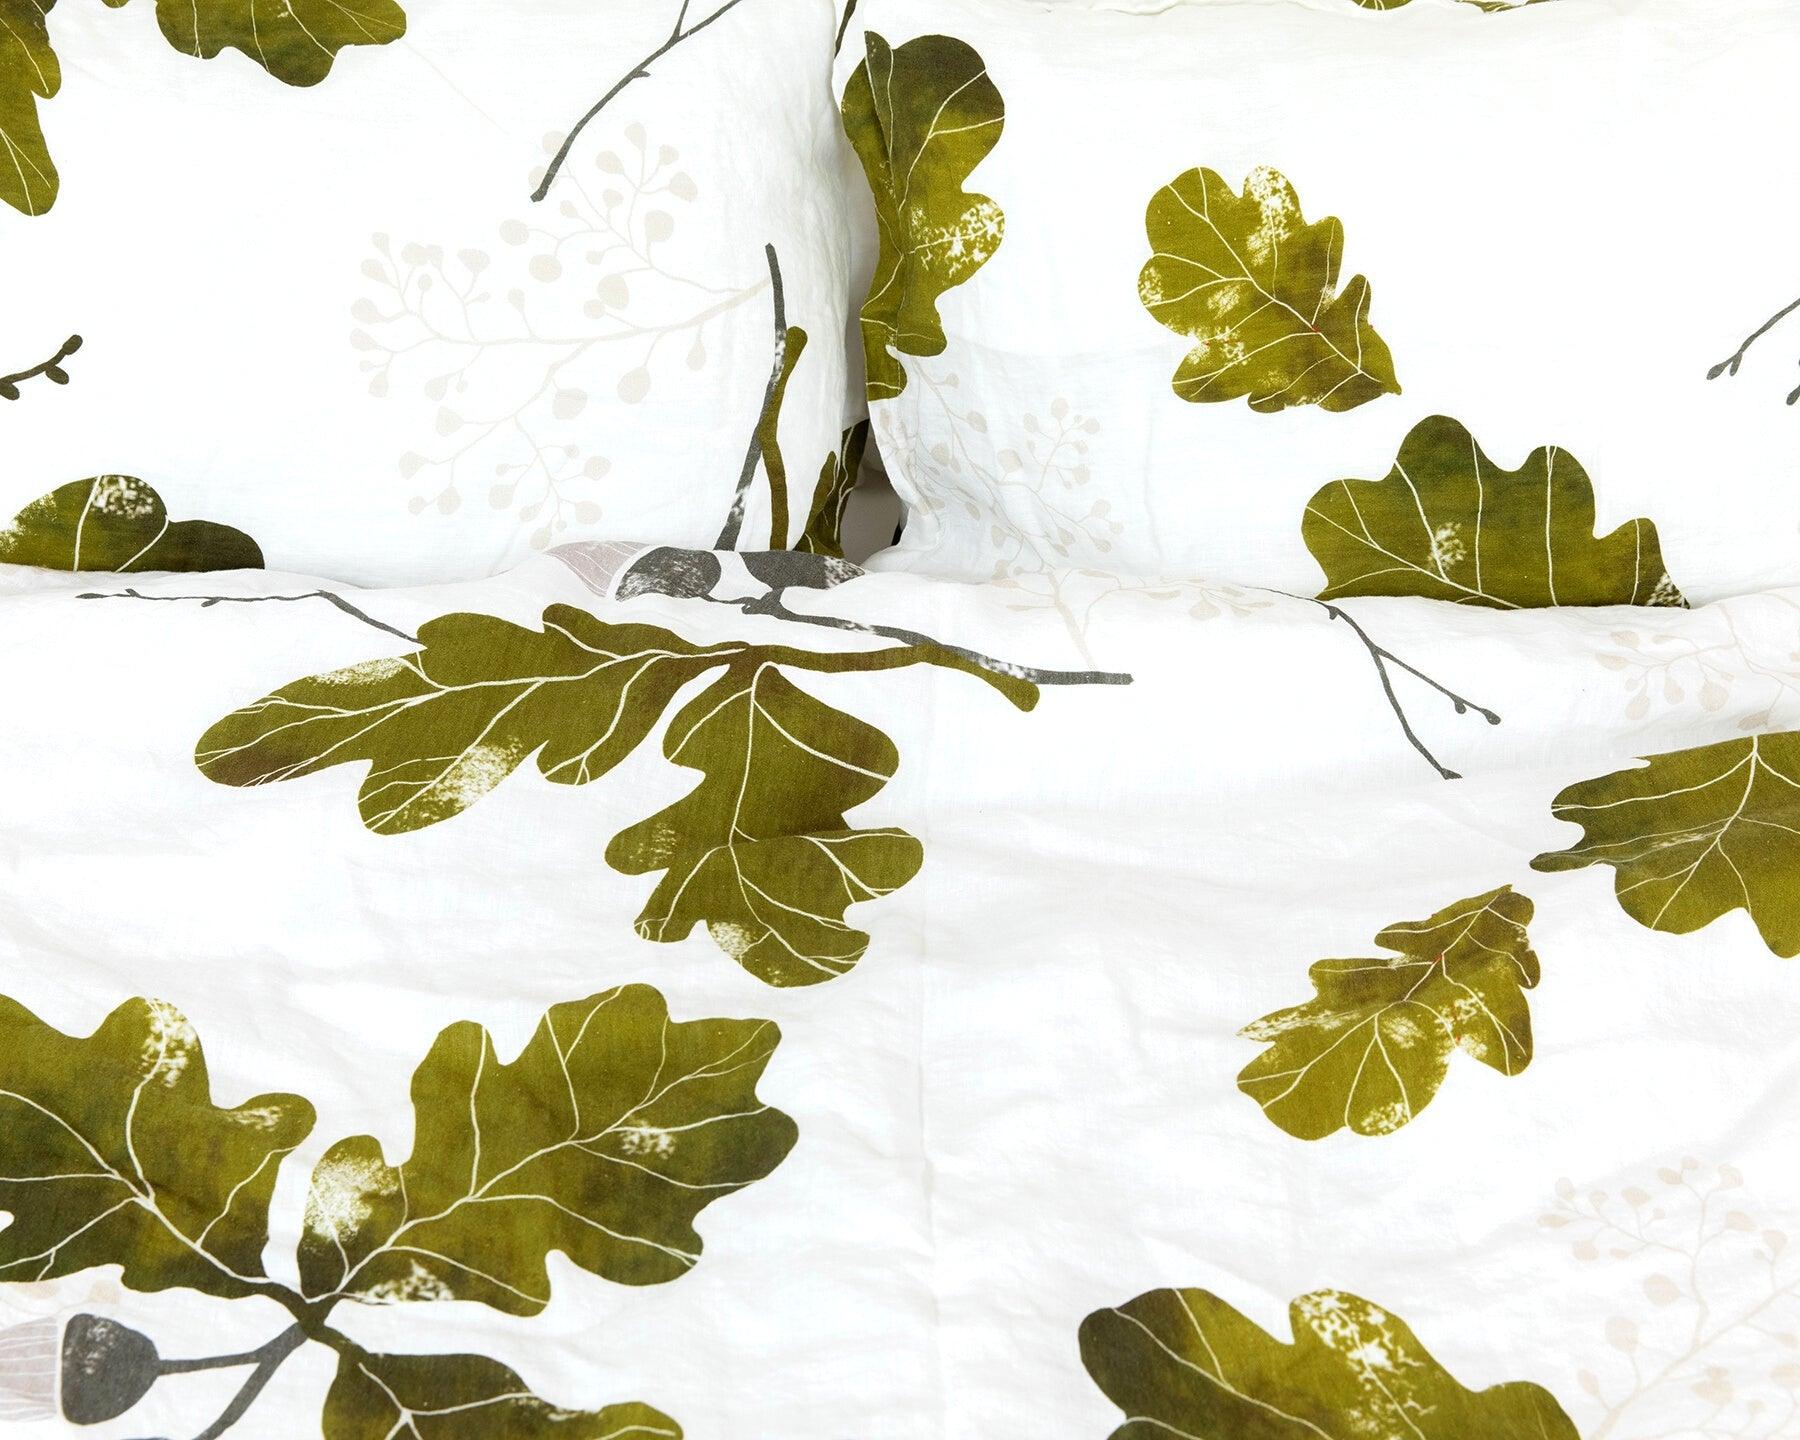 Organic european linen duvet cover set with Scandinavian acorn and oak leaves design - Twin / Standard, Full/Queen / Standard, King/Cal-King / Standard, King/Cal-King / King